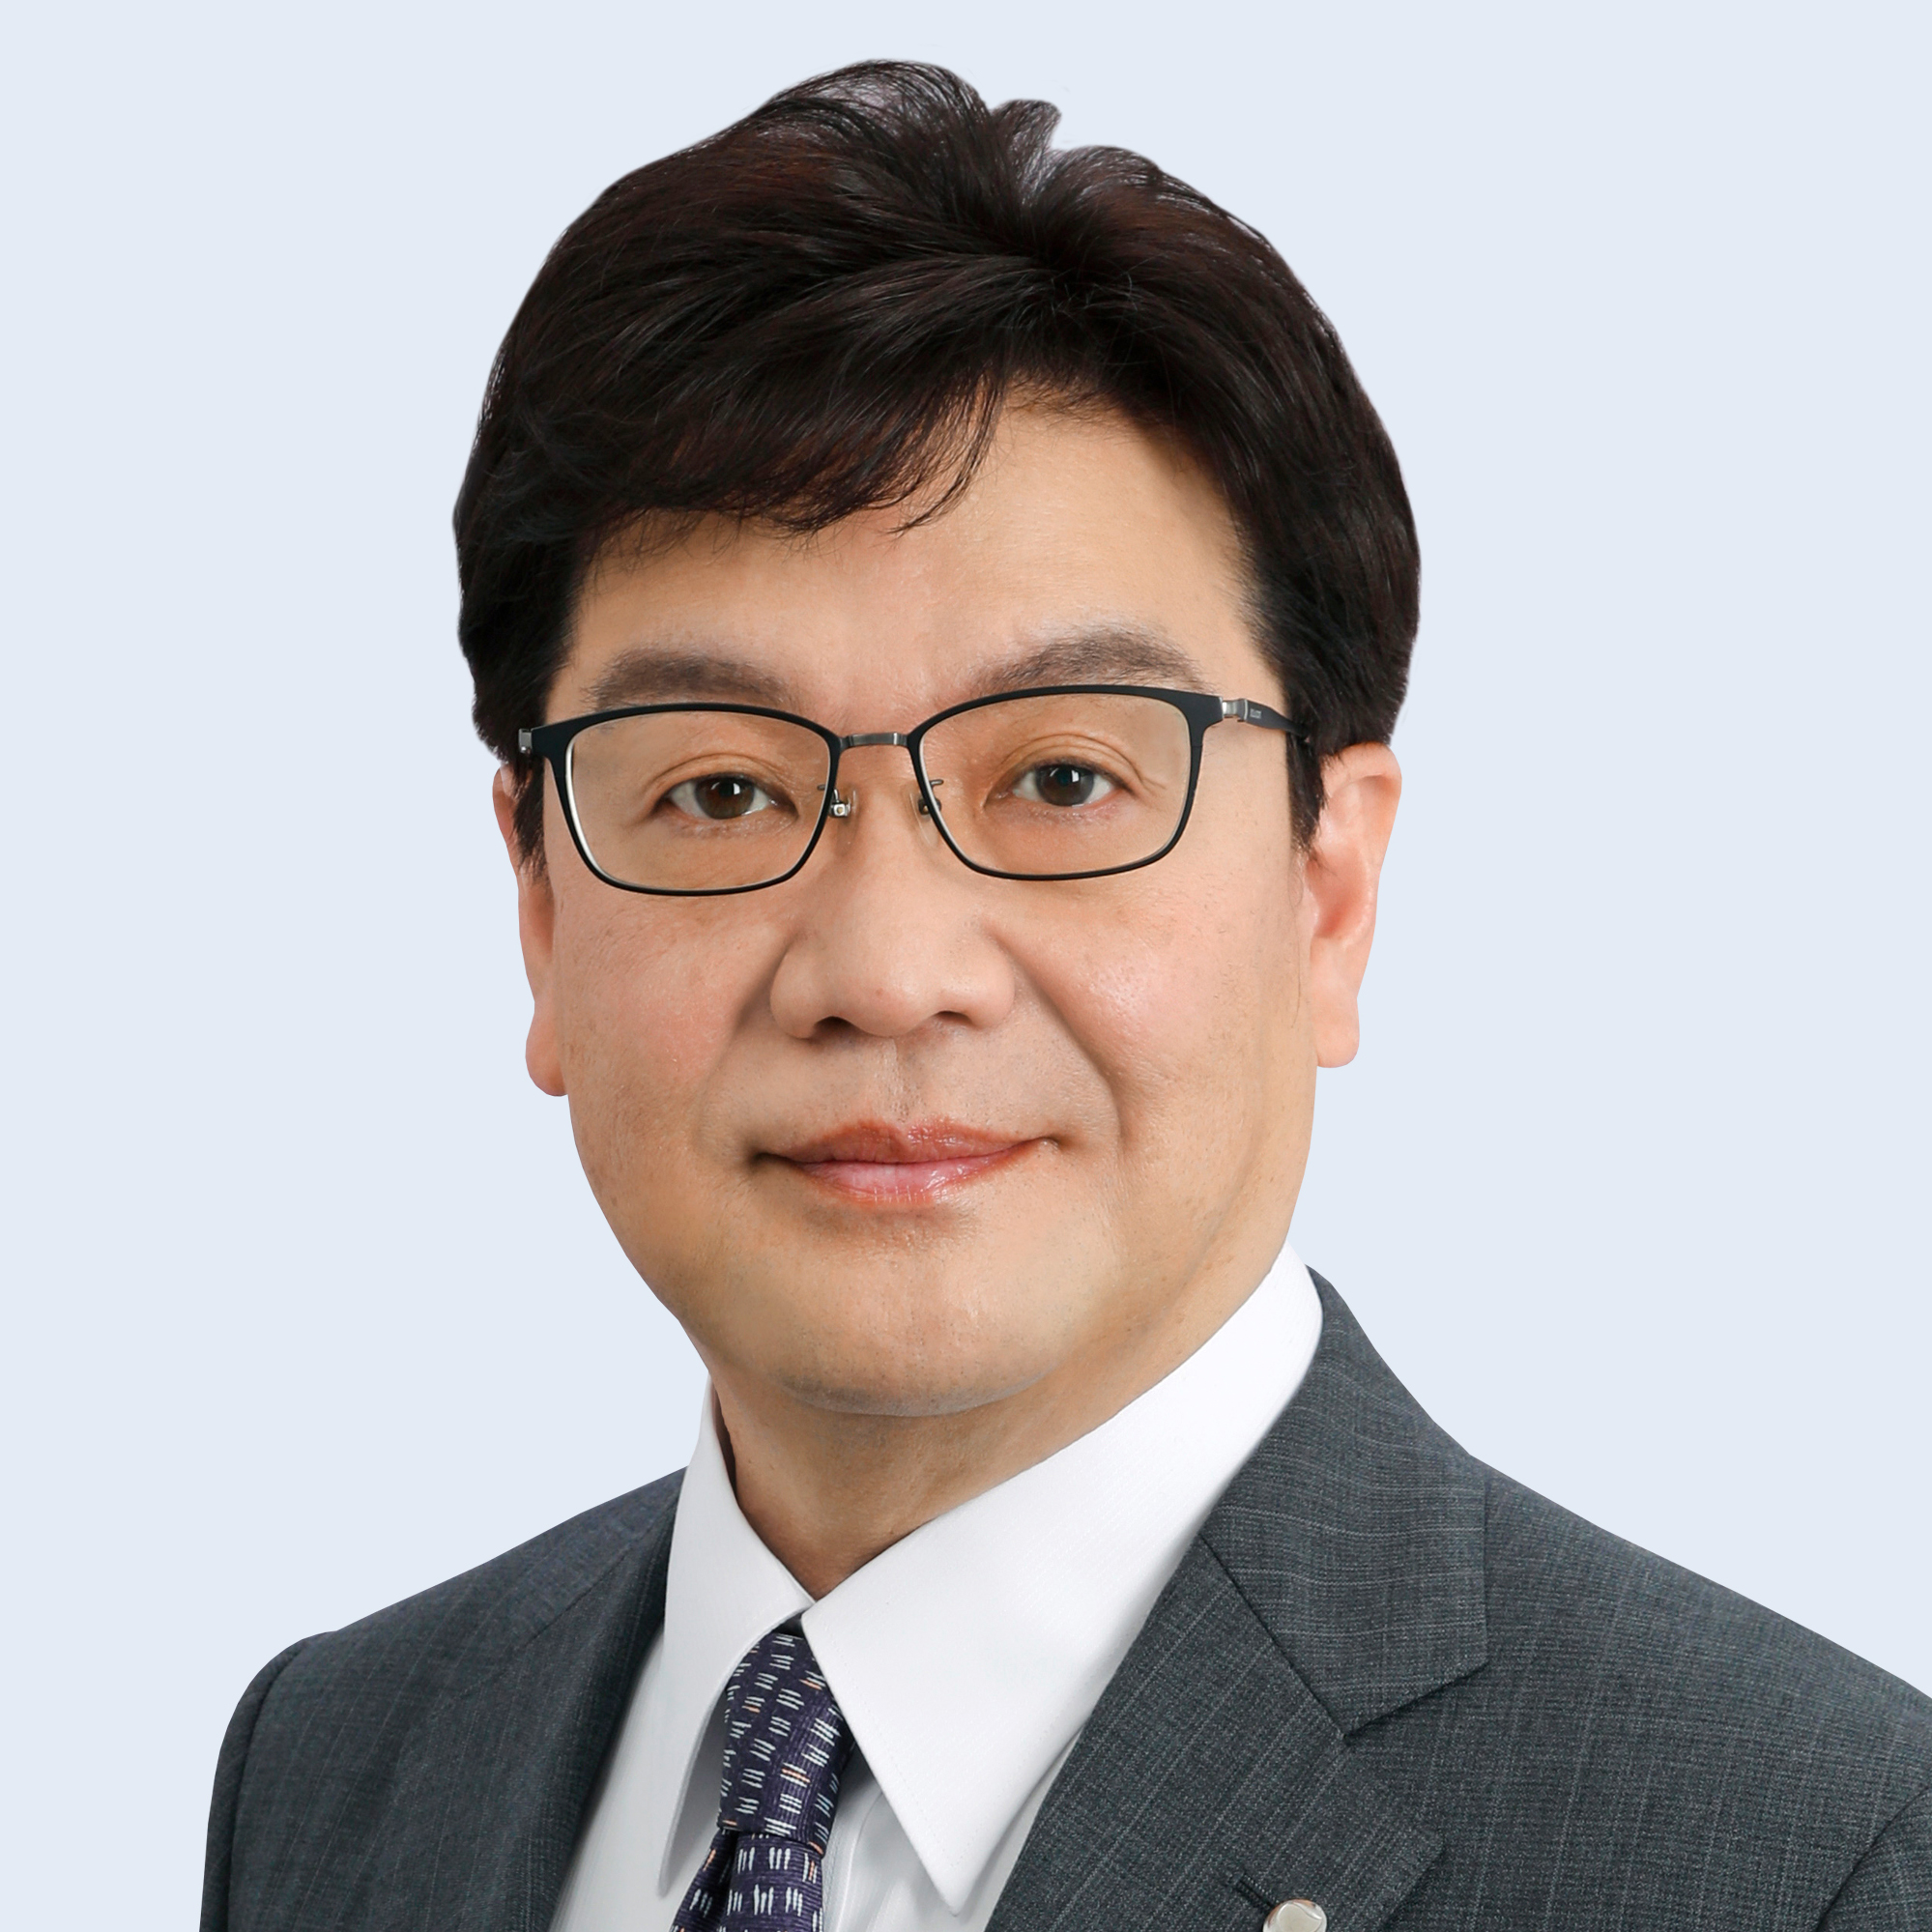 A headshot of Koji Sato in suit